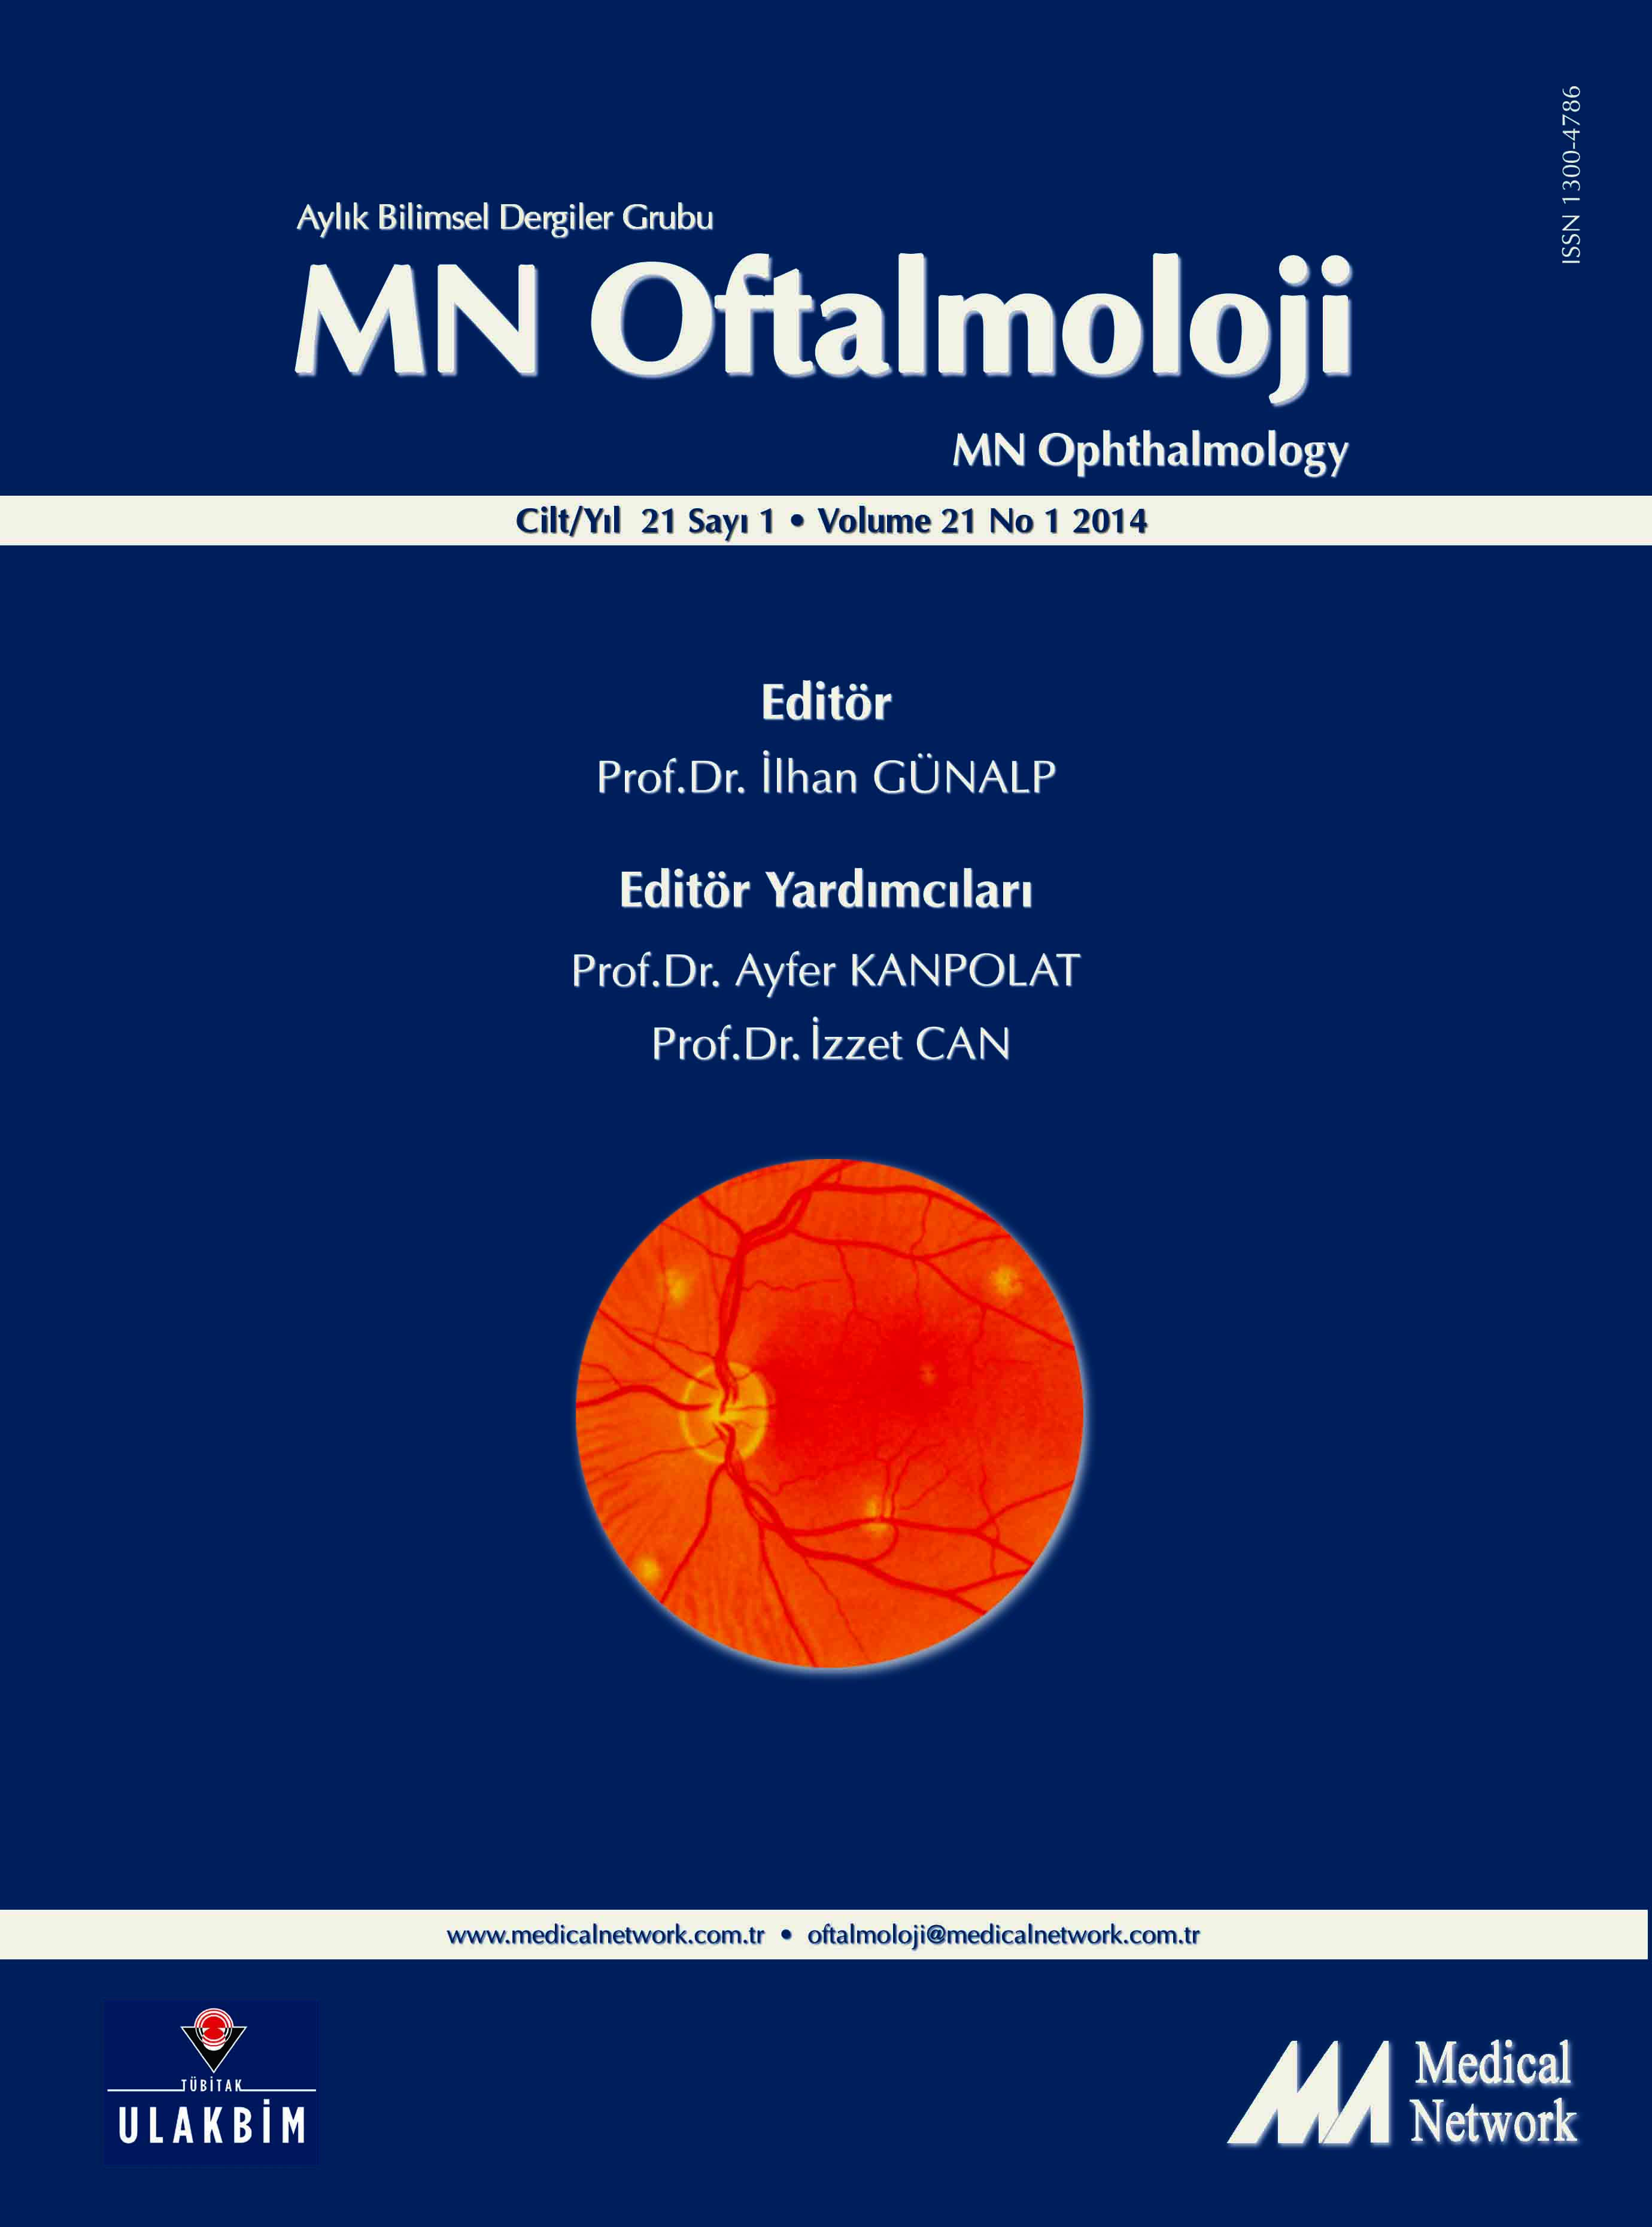 <p>MN Oftalmoloji Cilt: 21 Sayı: 1 2014 (MN Ophthalmology Volume: 21 No 1 2014)</p>